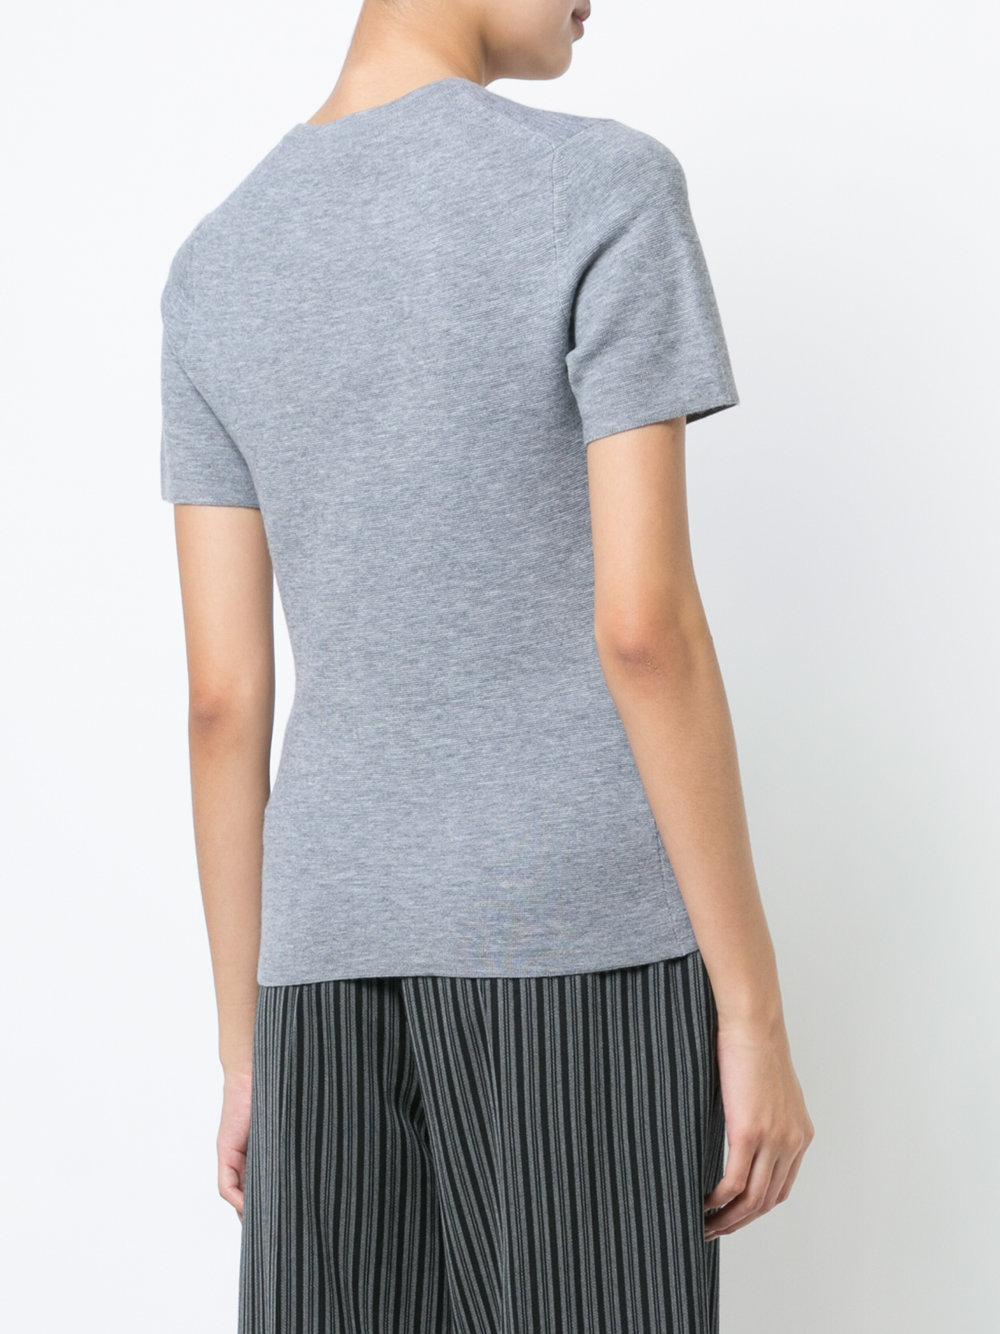 Gabriela Hearst Wool Knitted T-shirt in Grey (Gray) - Lyst